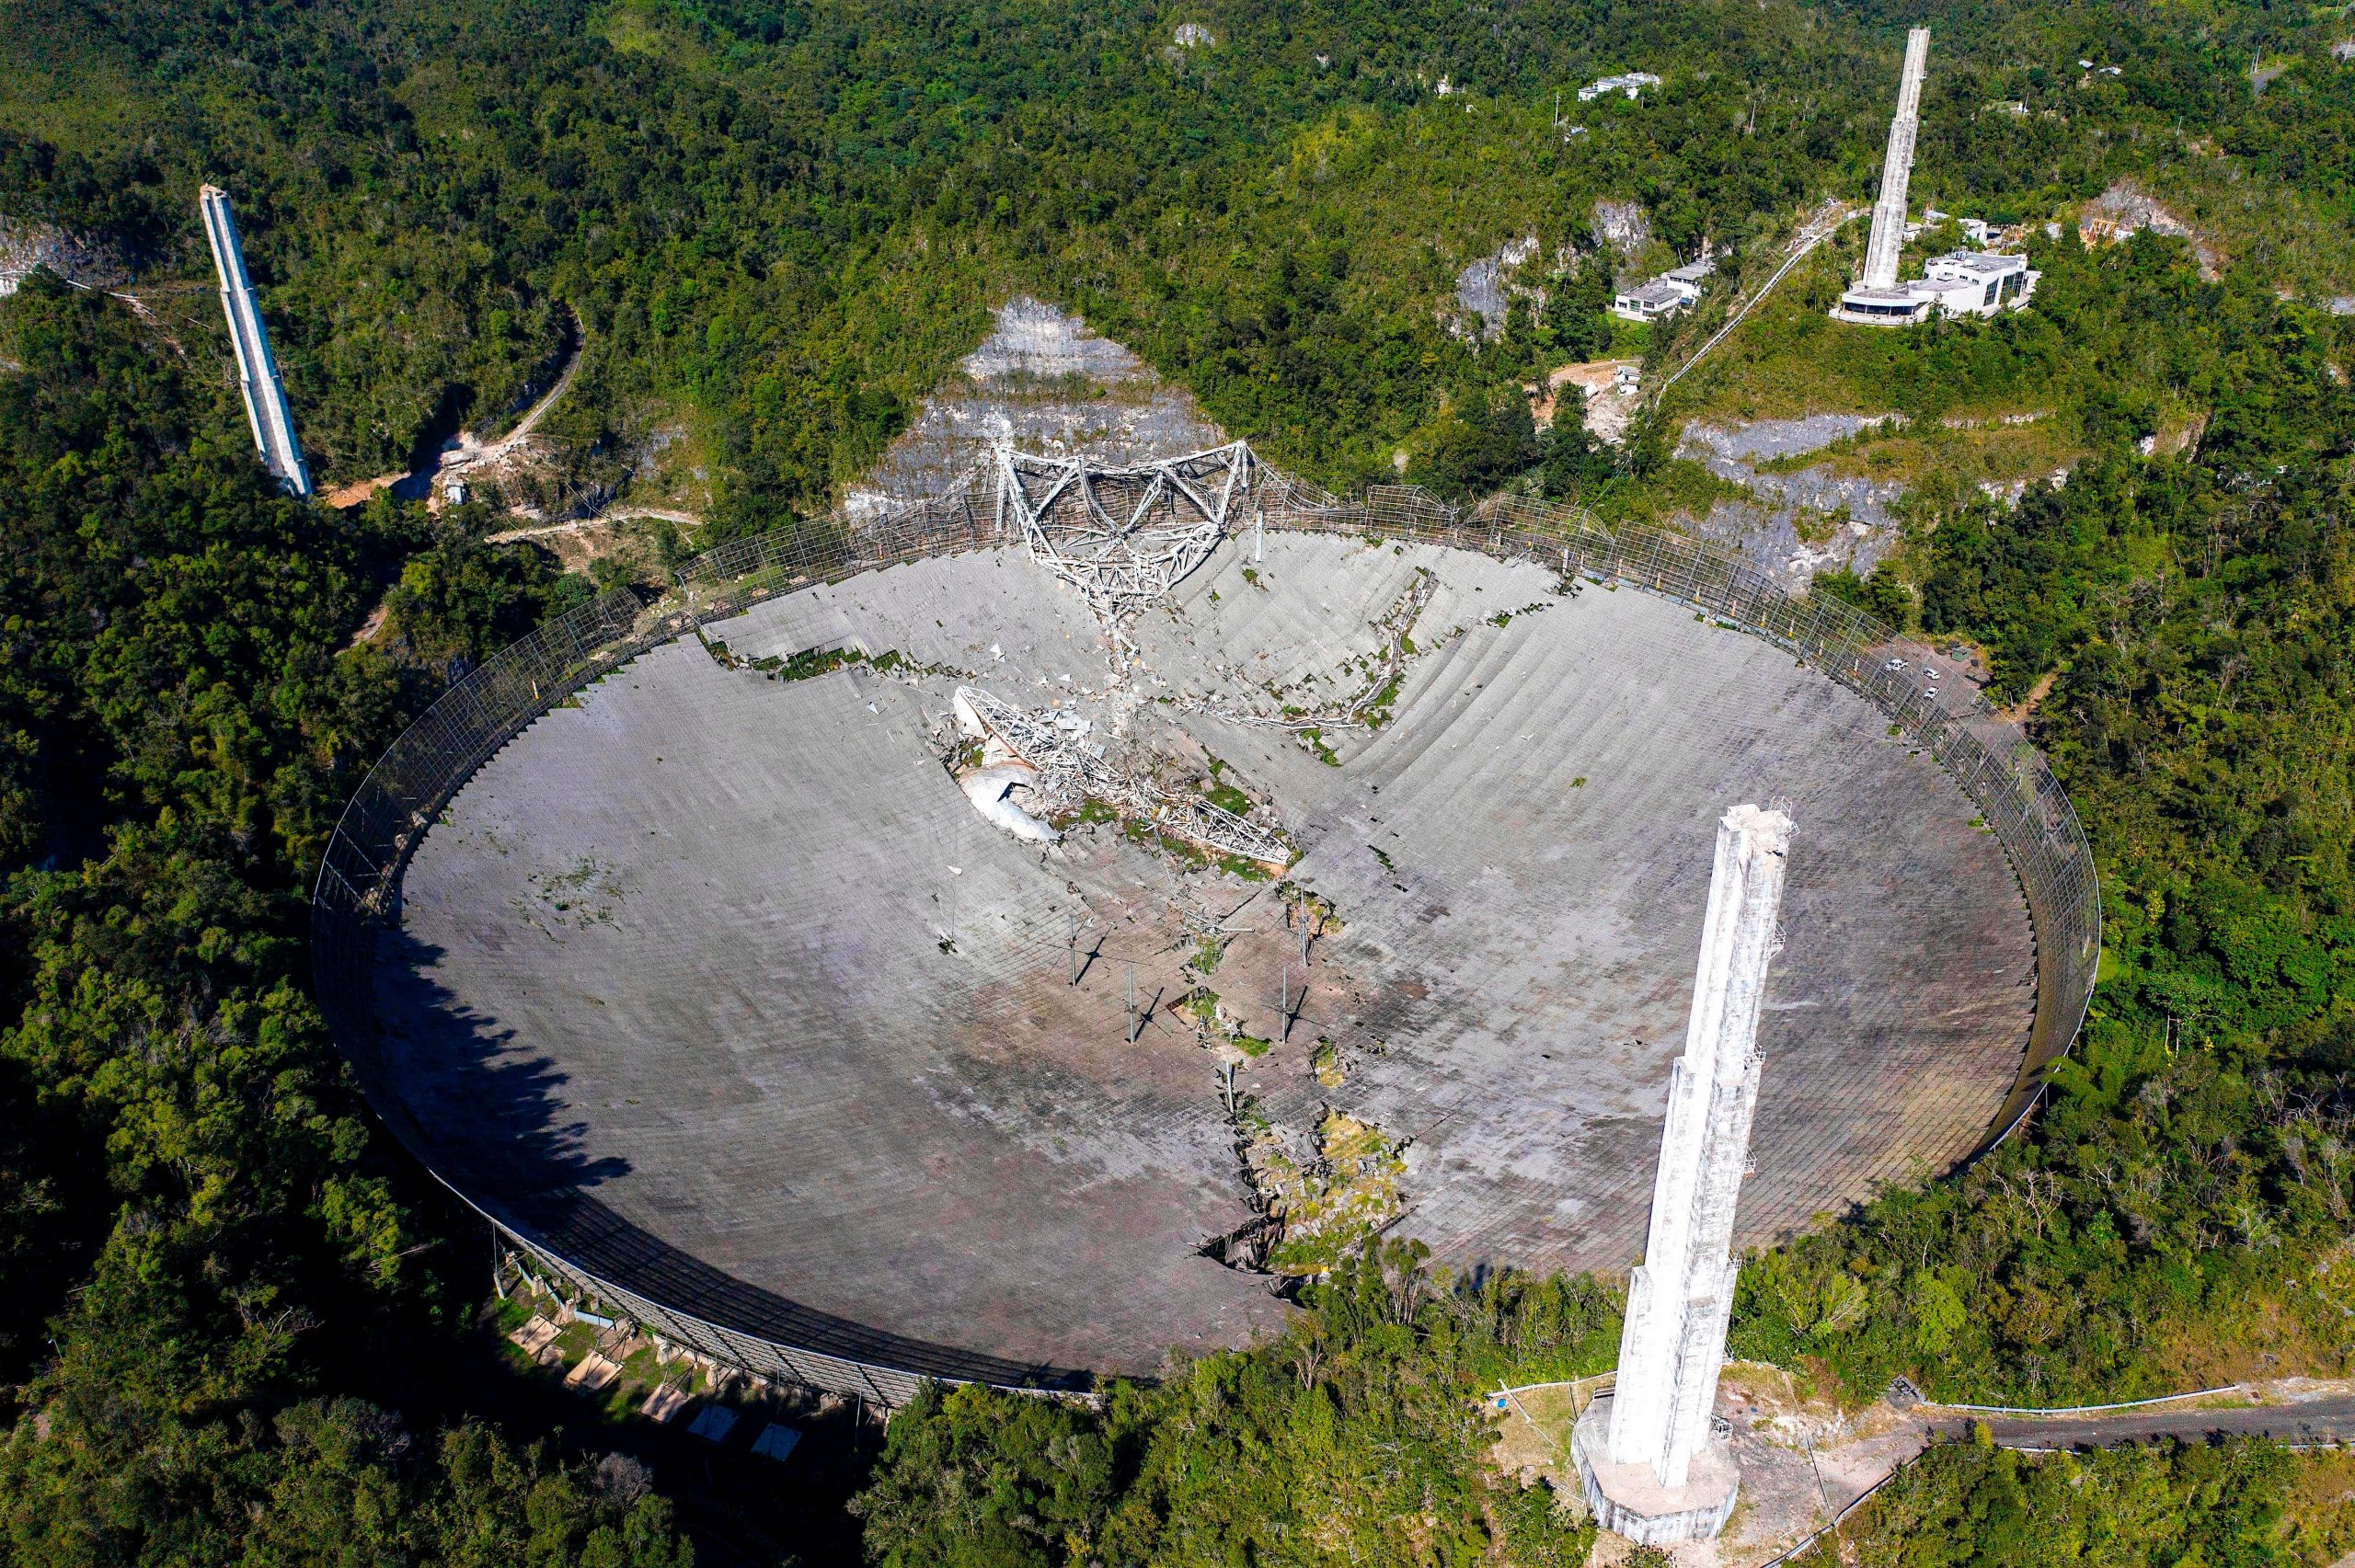 arecibo observatory damage radio telescope receiver platform